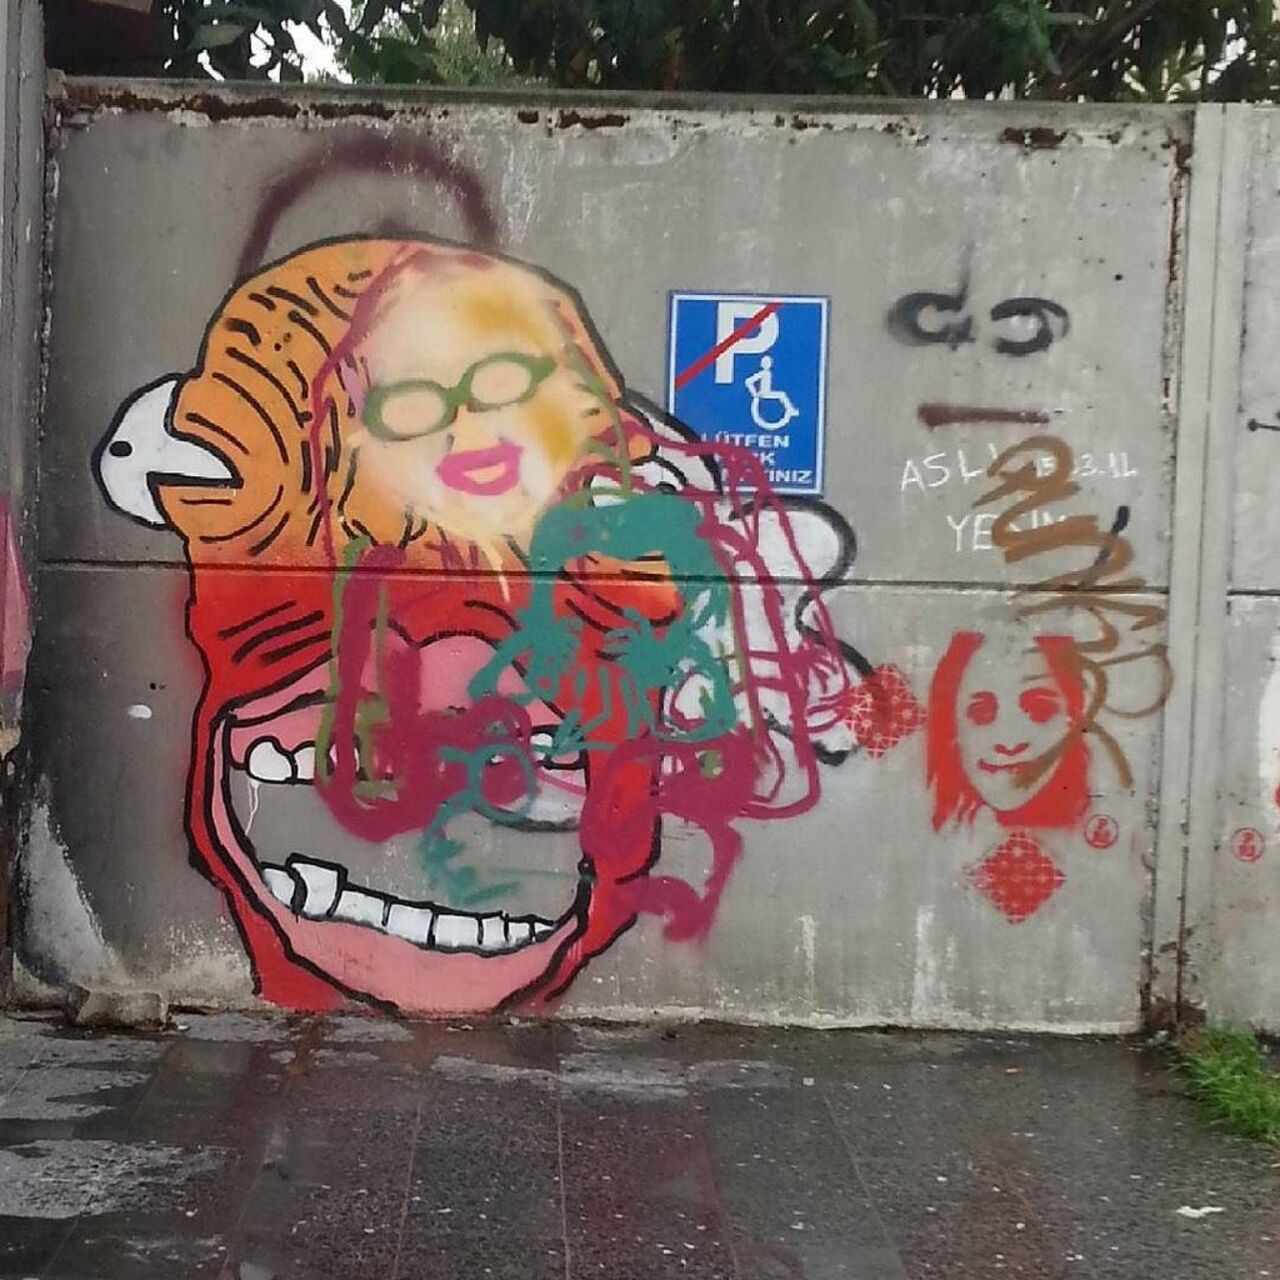 #streetartkadikoy #streetart #graffiti #publicart #urbanart #sokaksanatı #streetartistanbul #istanbulstreetart #gra… https://t.co/EJpftqLC9e